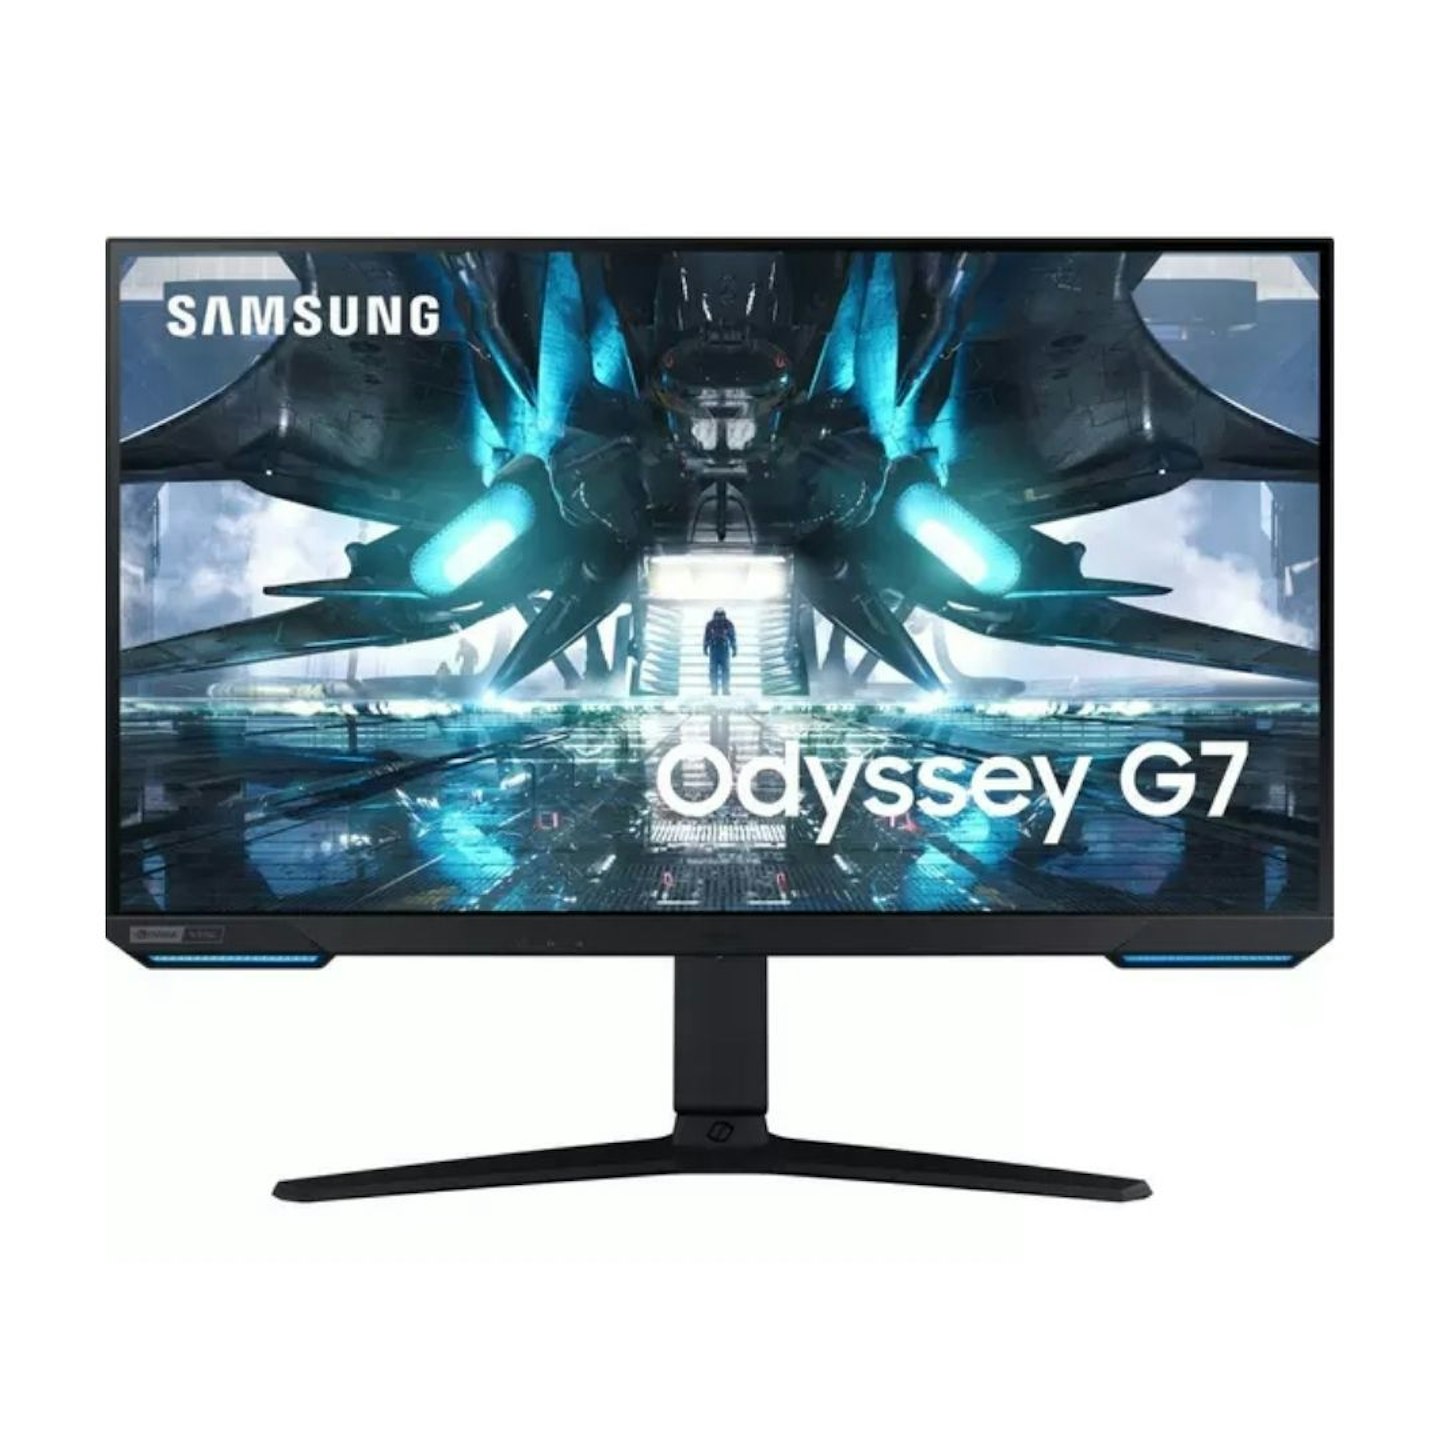 Samsung Odyssey G7 4K Ultra HD LED 28 Gaming Monitor